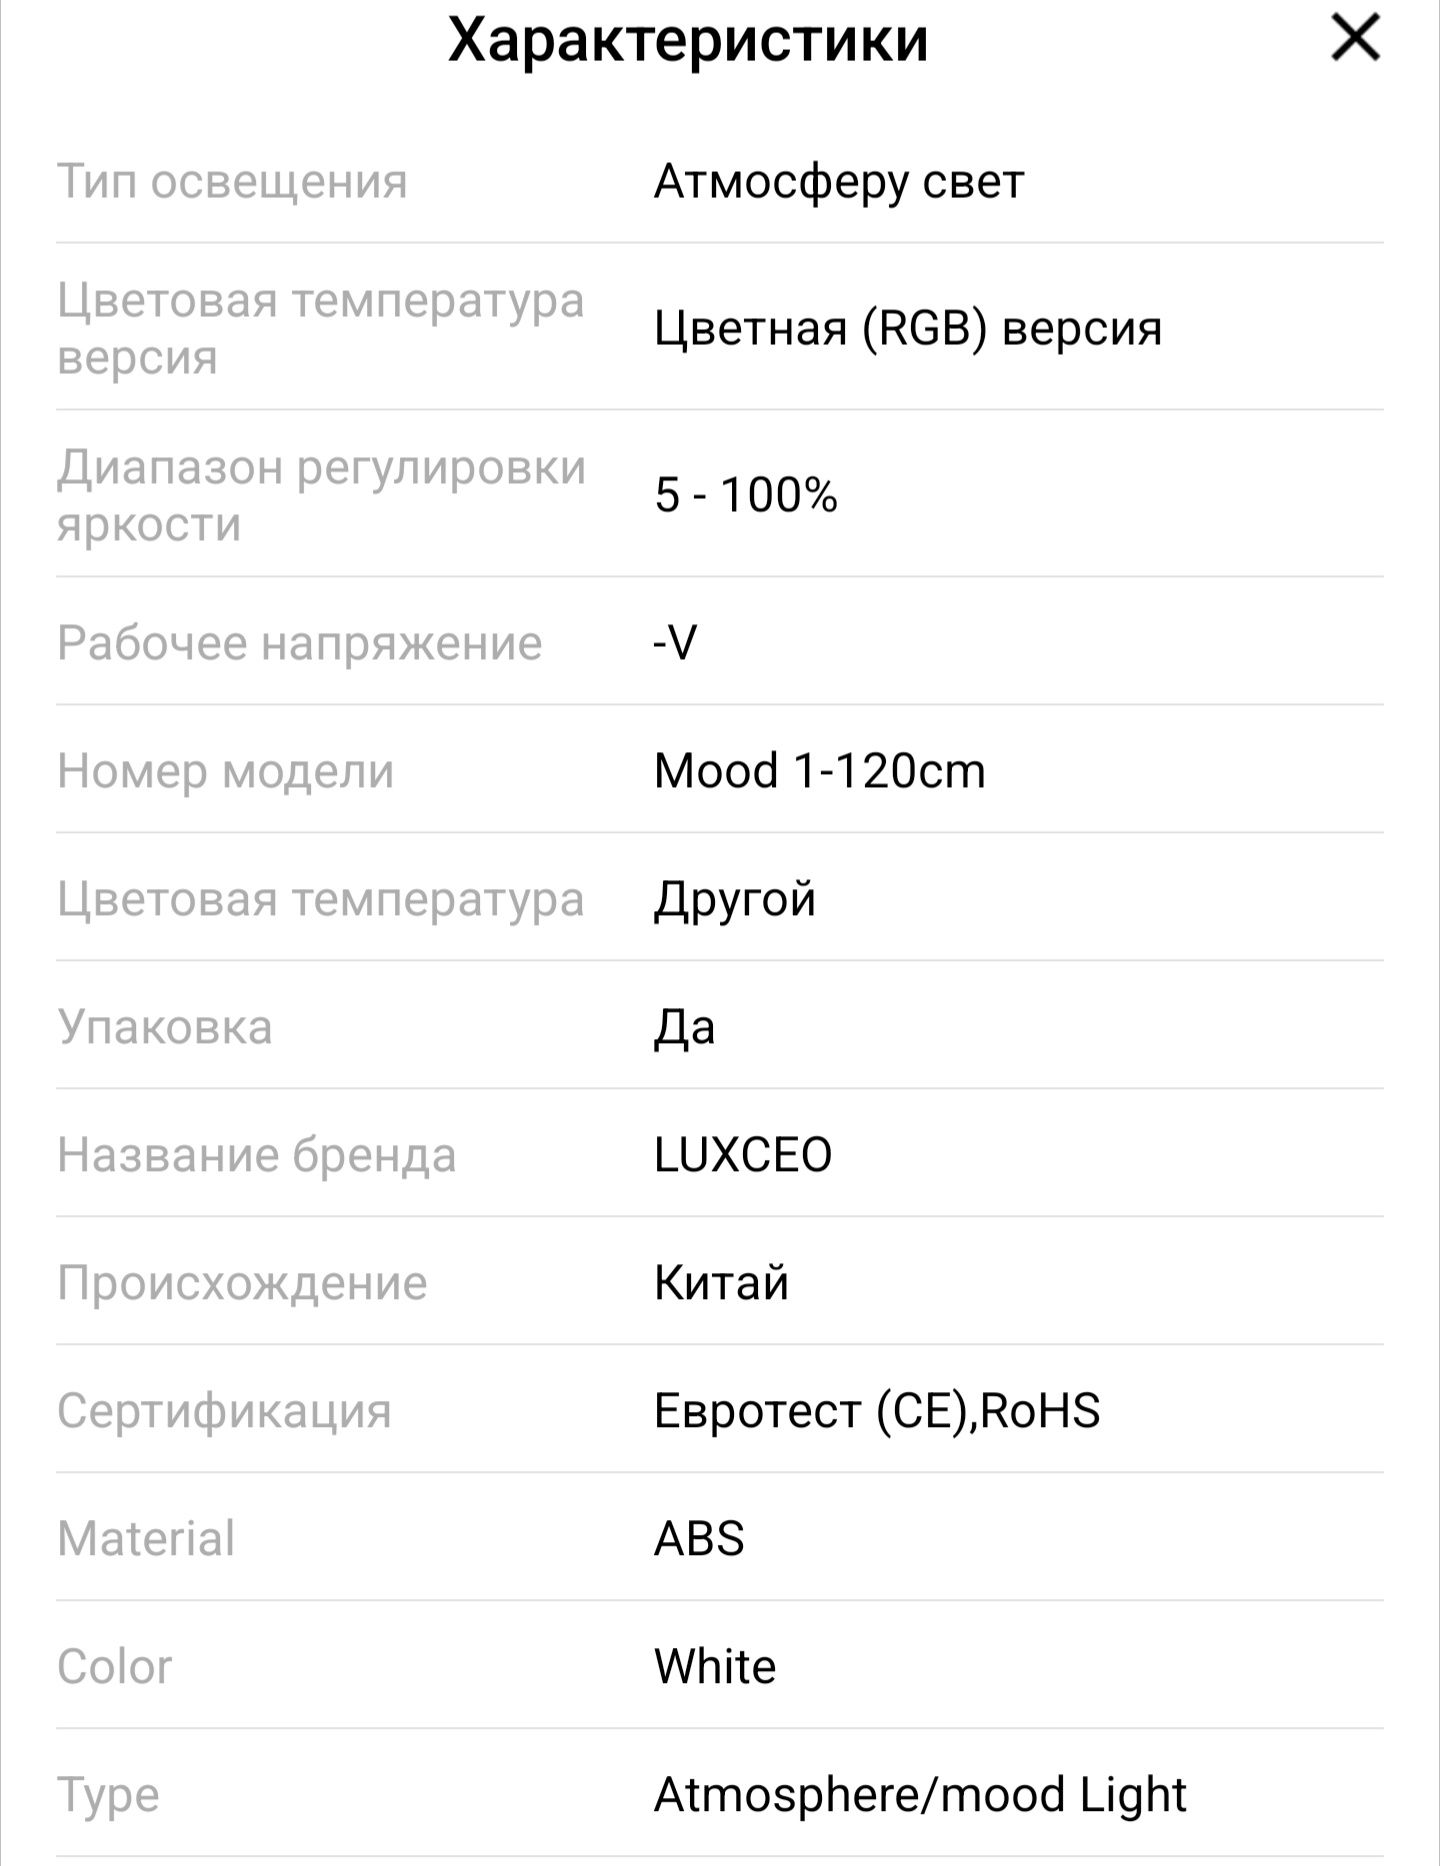 Постійне світло трубка Luxceo RGB 120см
1 400,00 грн
vtochku
1 
vtochk